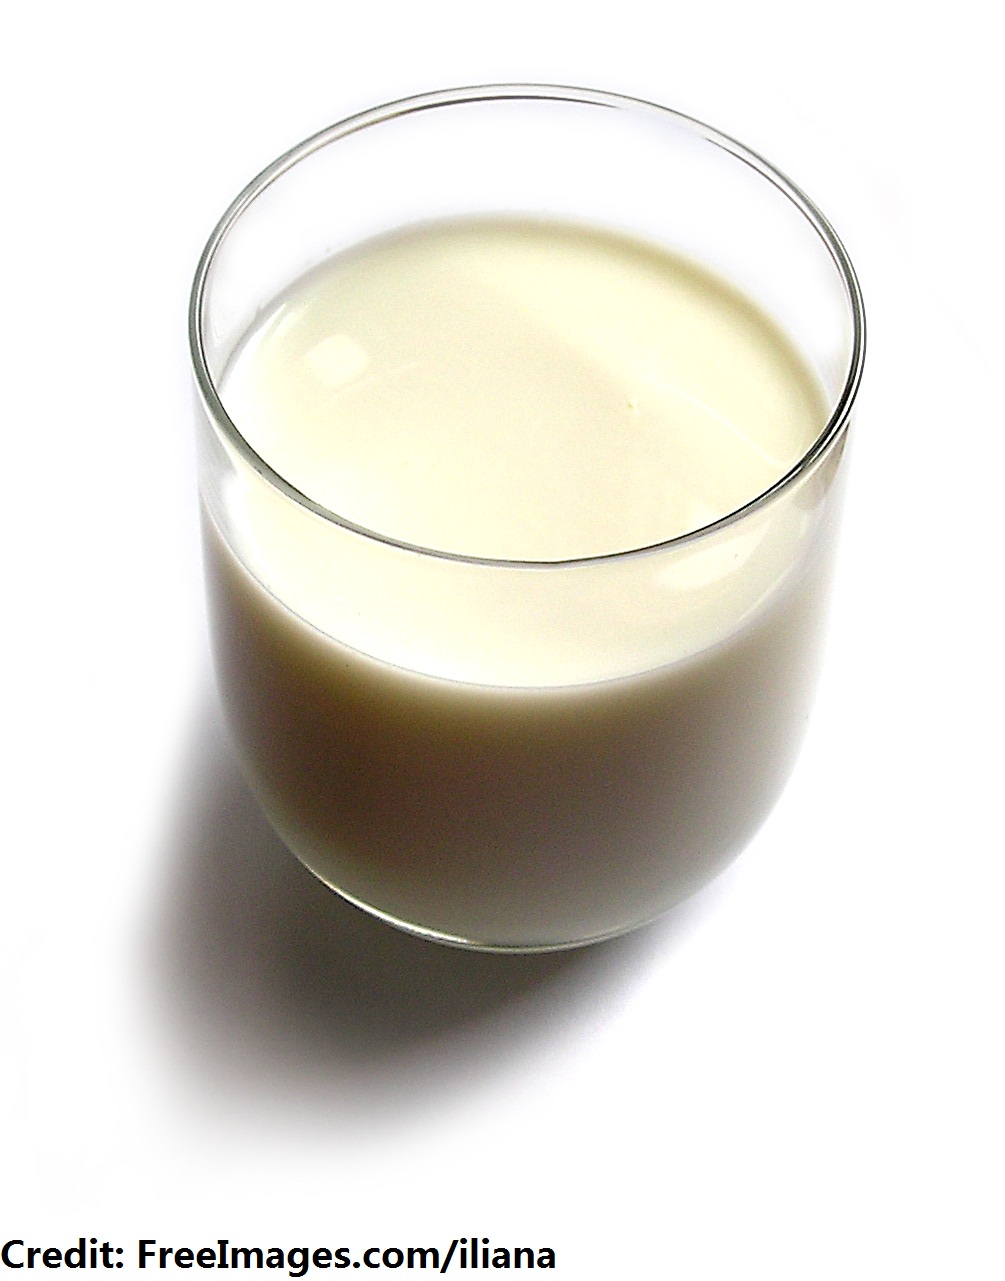 milk-2-1498976